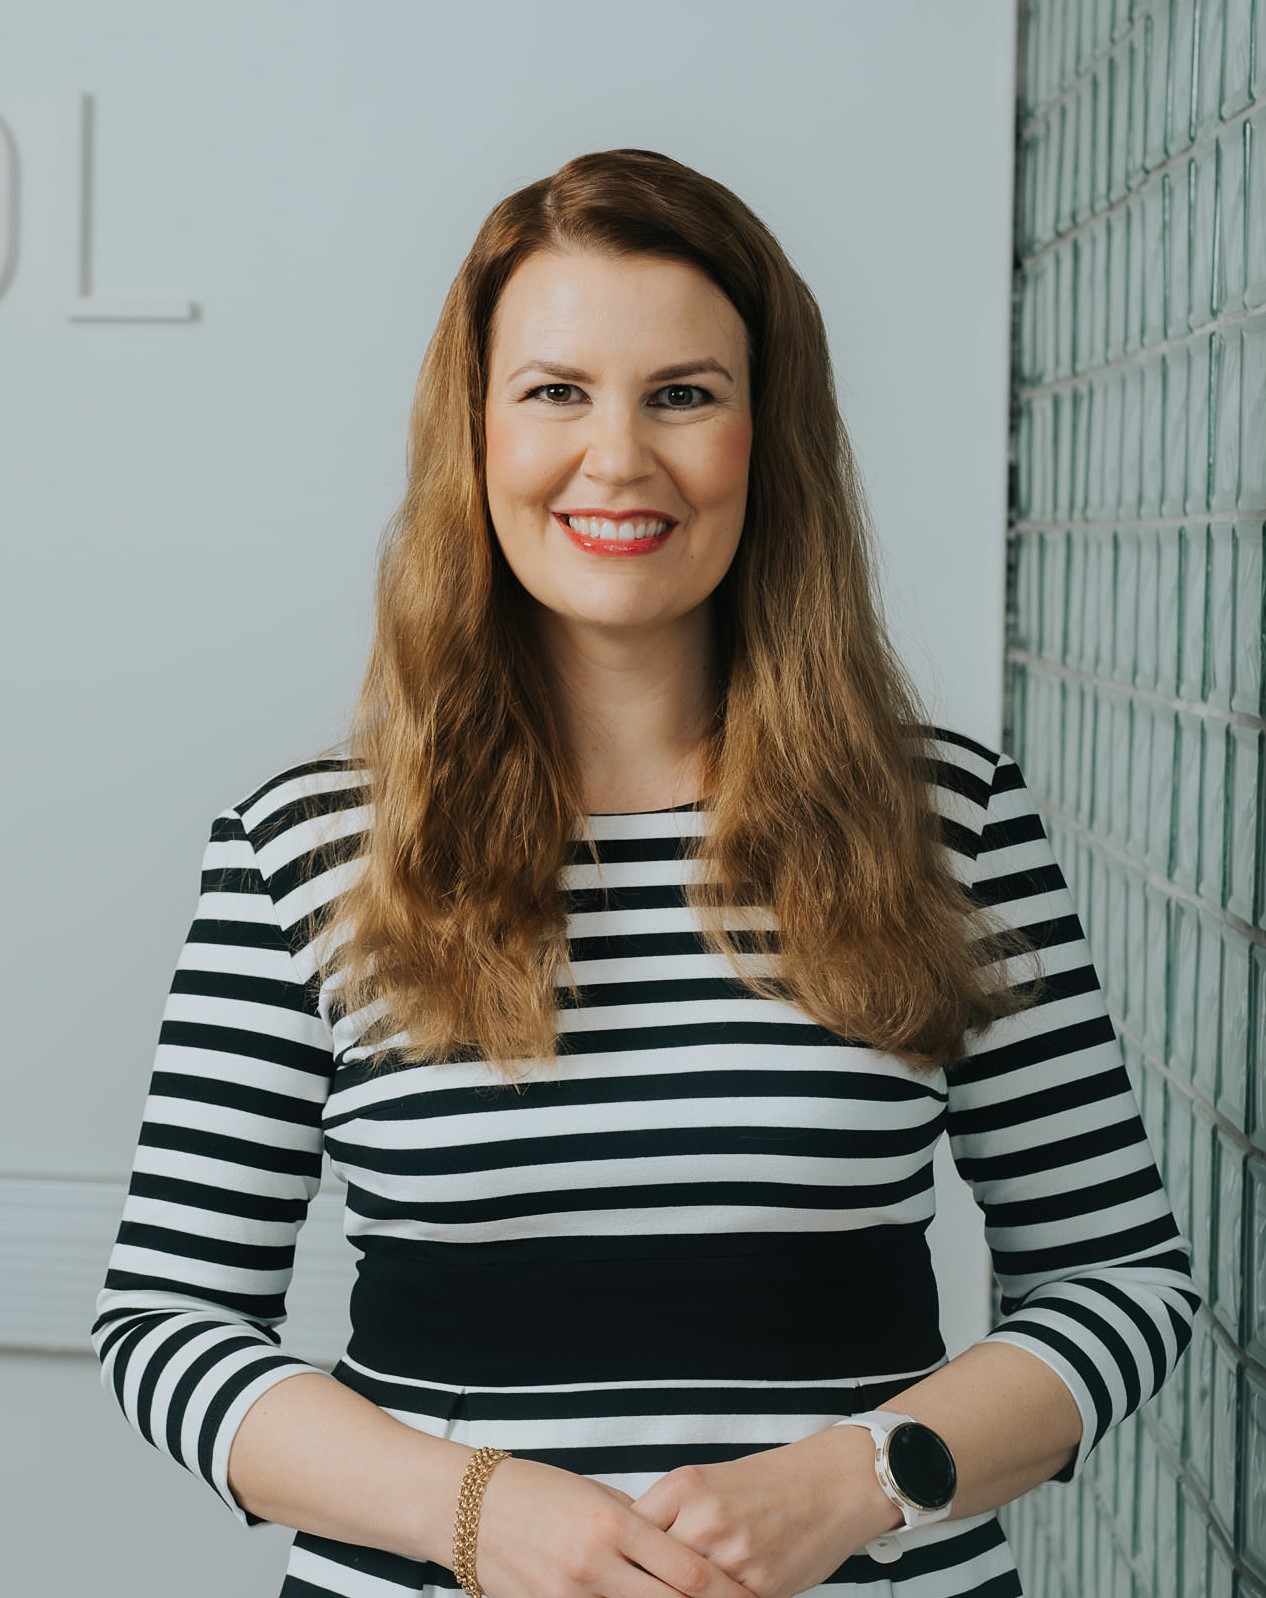 Katri Perälä, the chief executive officer of Webropol.